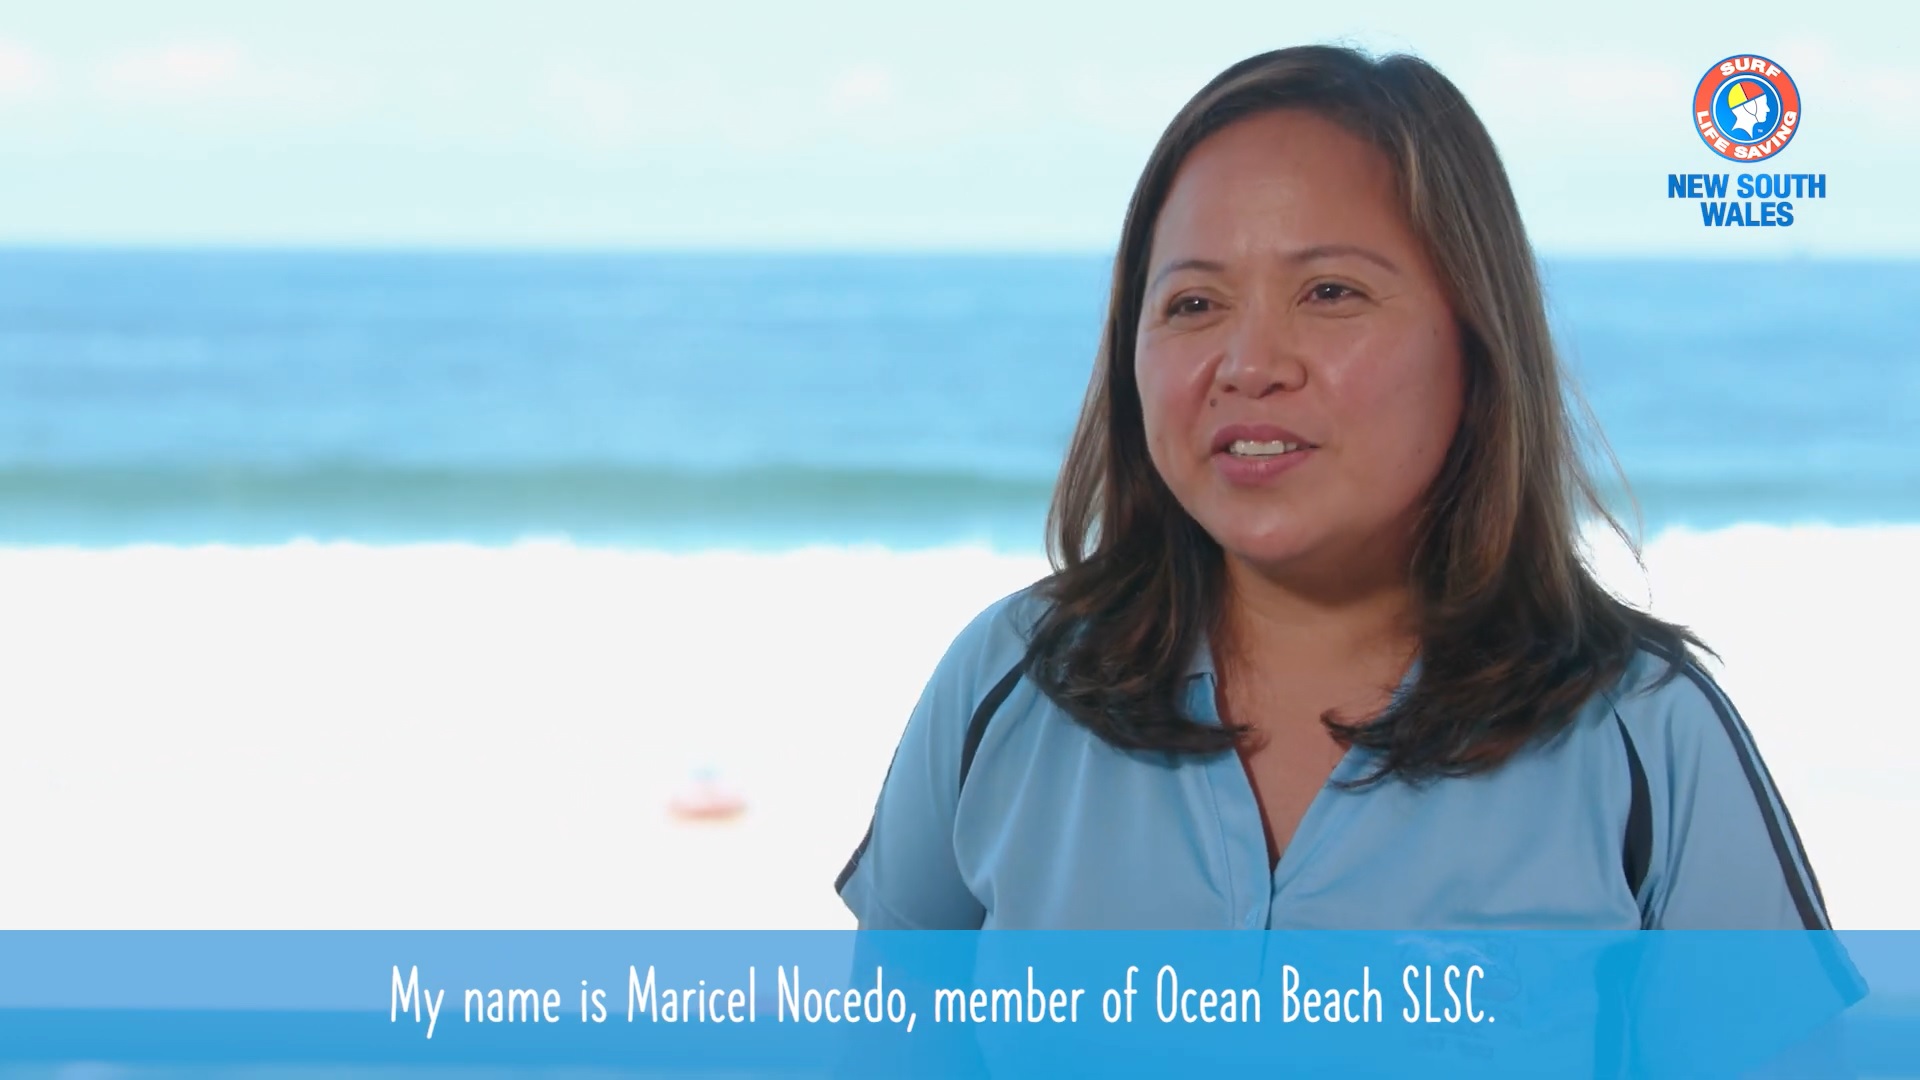 Meet A Lifesaver - Maricel Nocedo